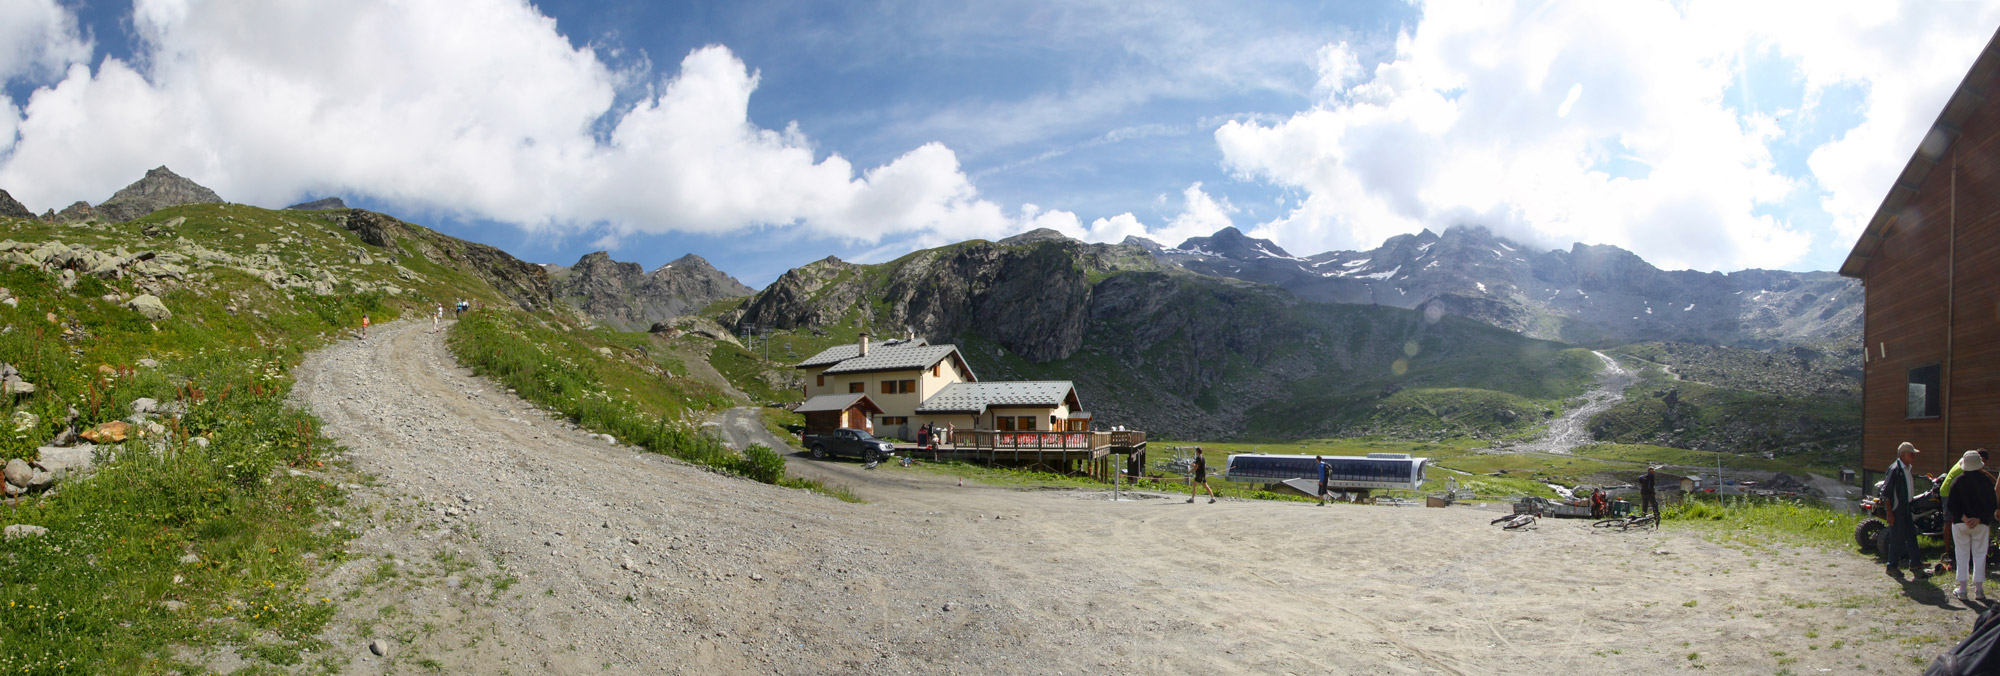 Station de ski Orelle 3 Vallées - Plan Bouchet